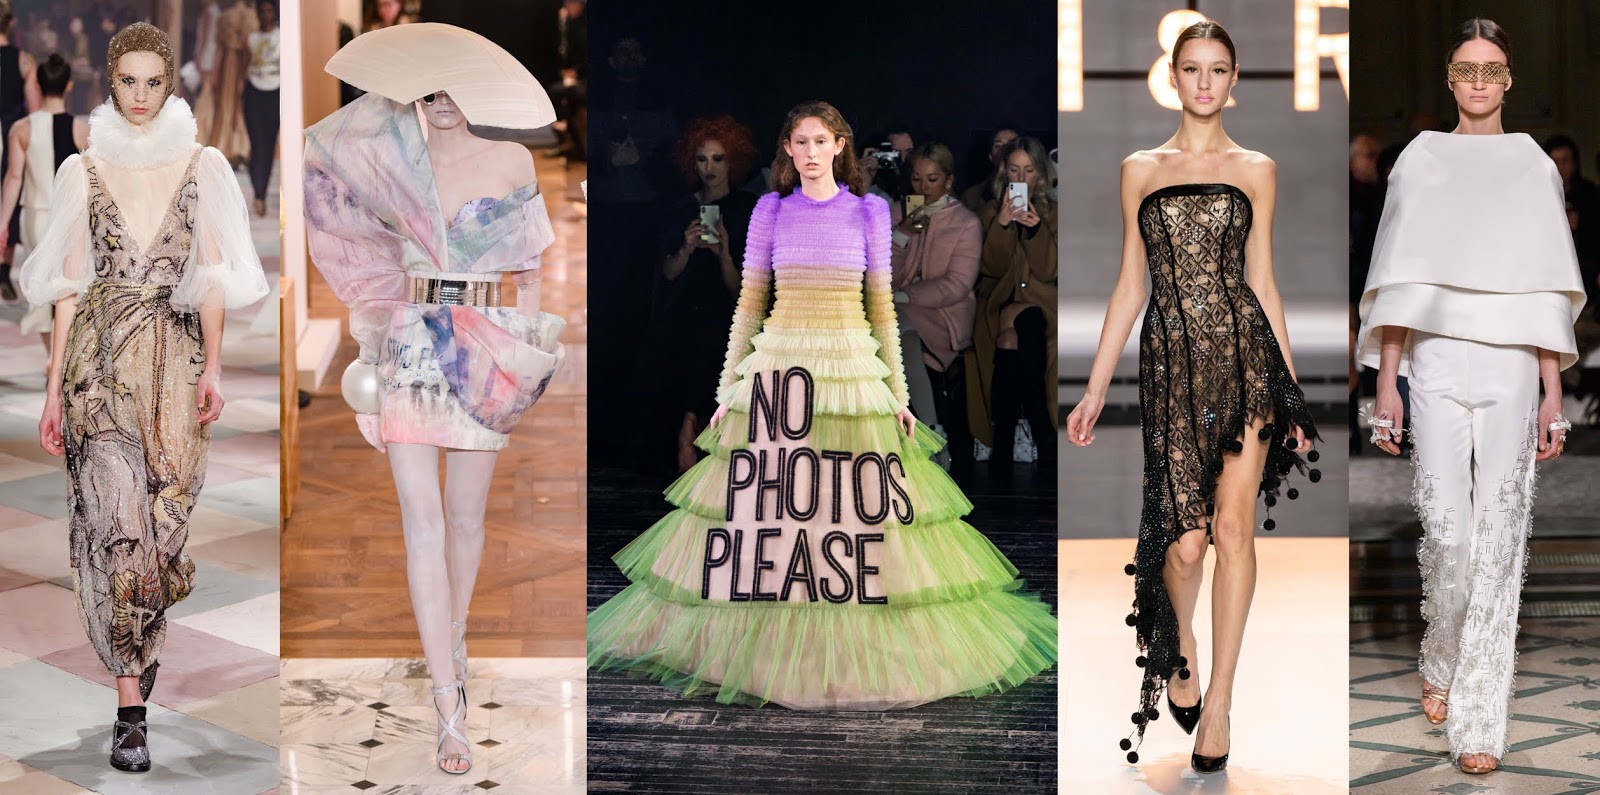 Fashion statements at Haute Couture week - Moda 2.0: Blog de